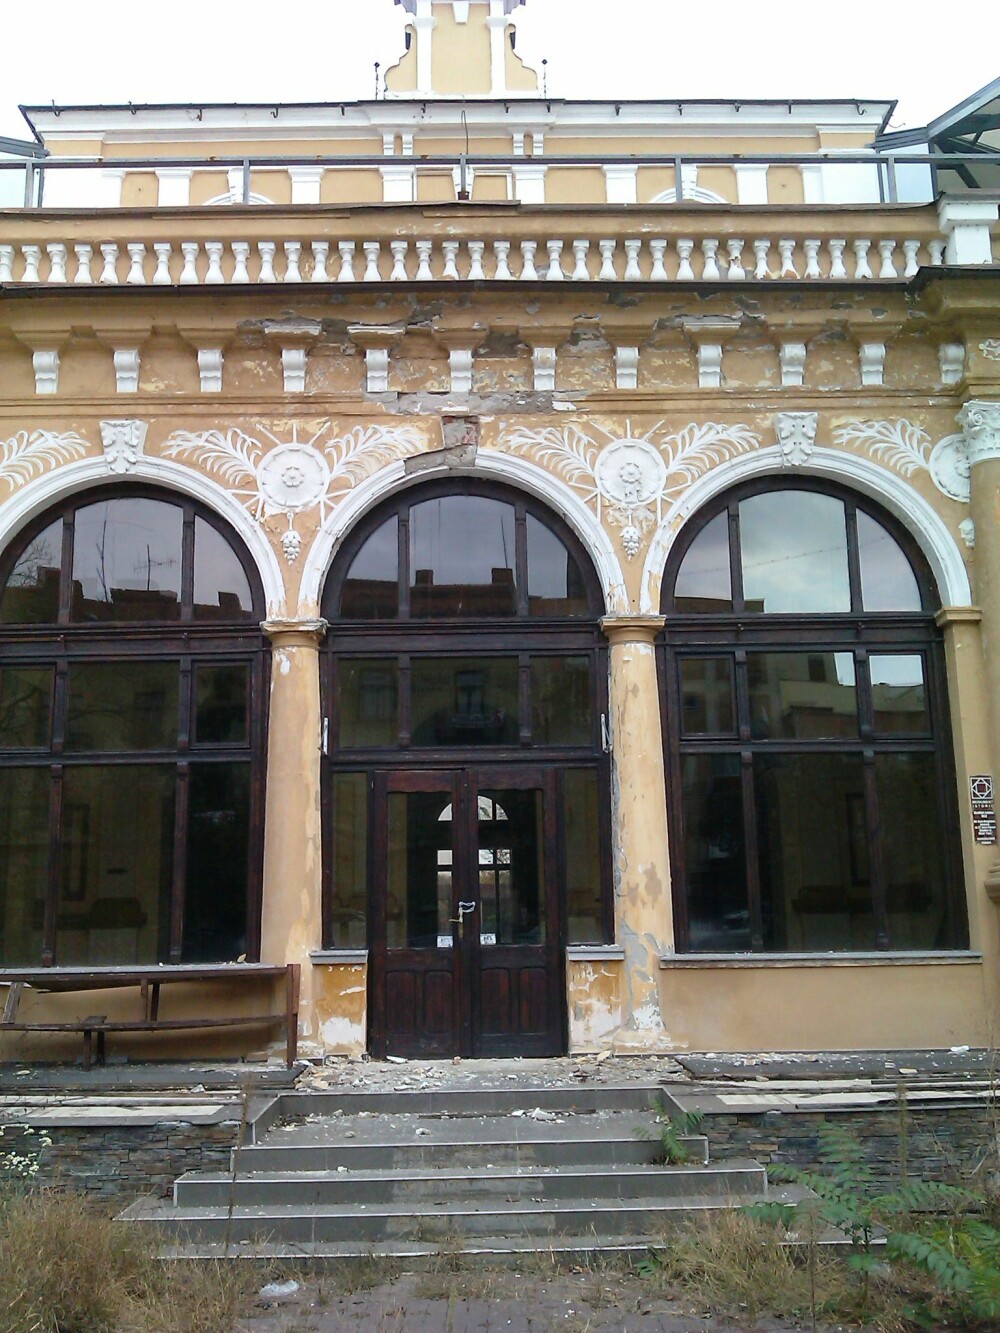 Cazinoul din Arad a ajuns in paragina. Vezi cum arata cladirea declarata monument istoric - Imaginea 2